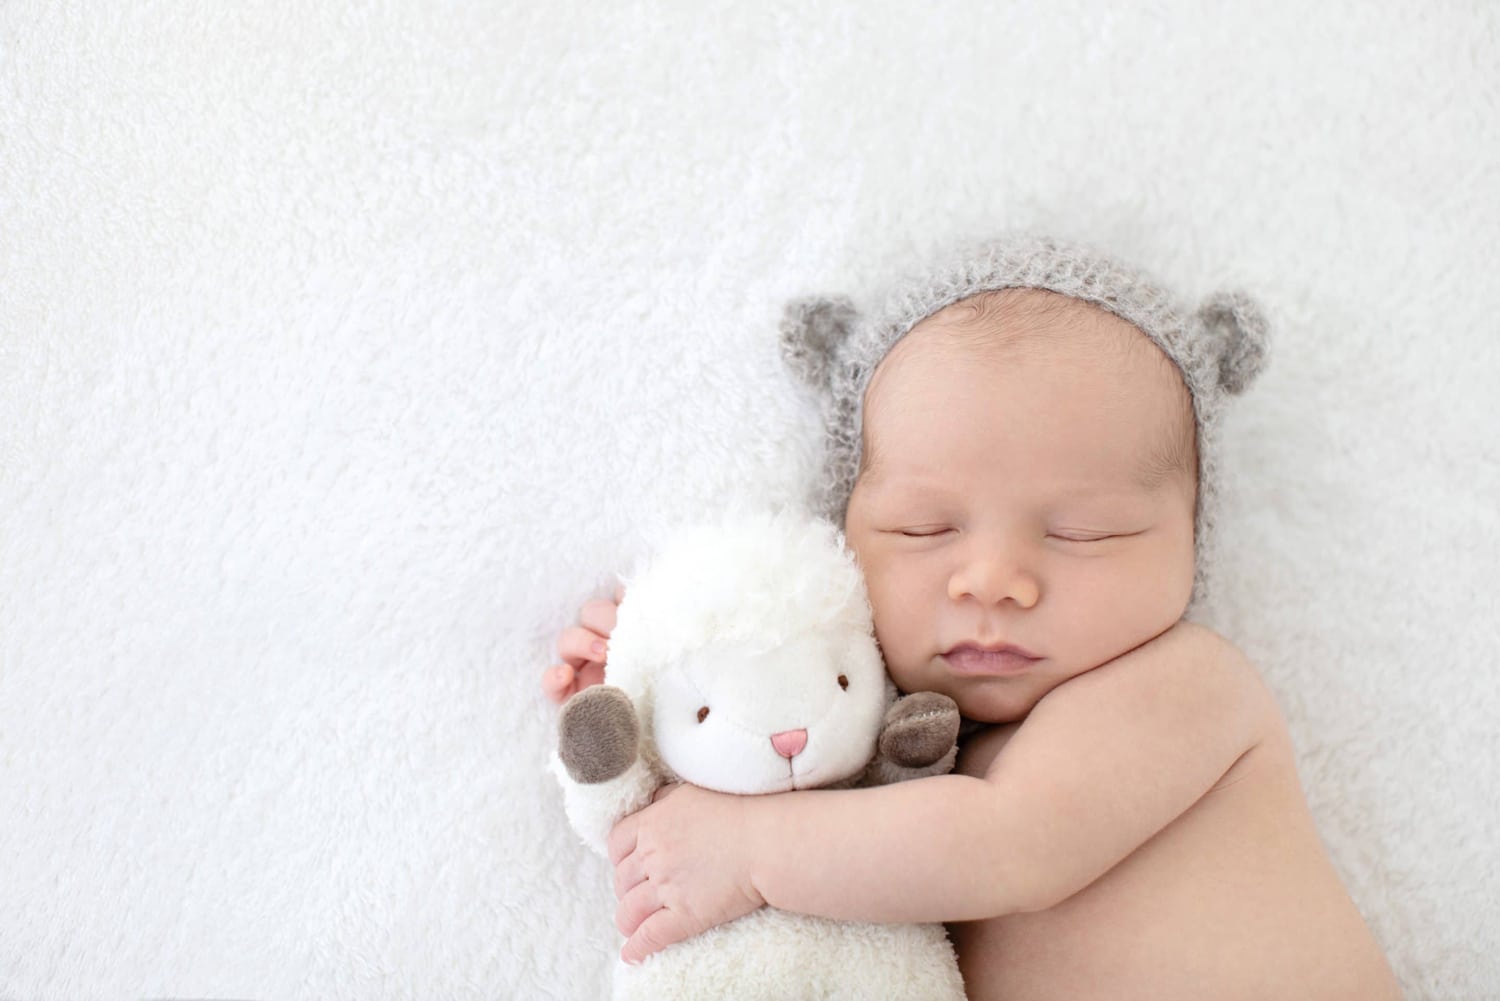 Newborn baby cuddles with stuffed sheep.